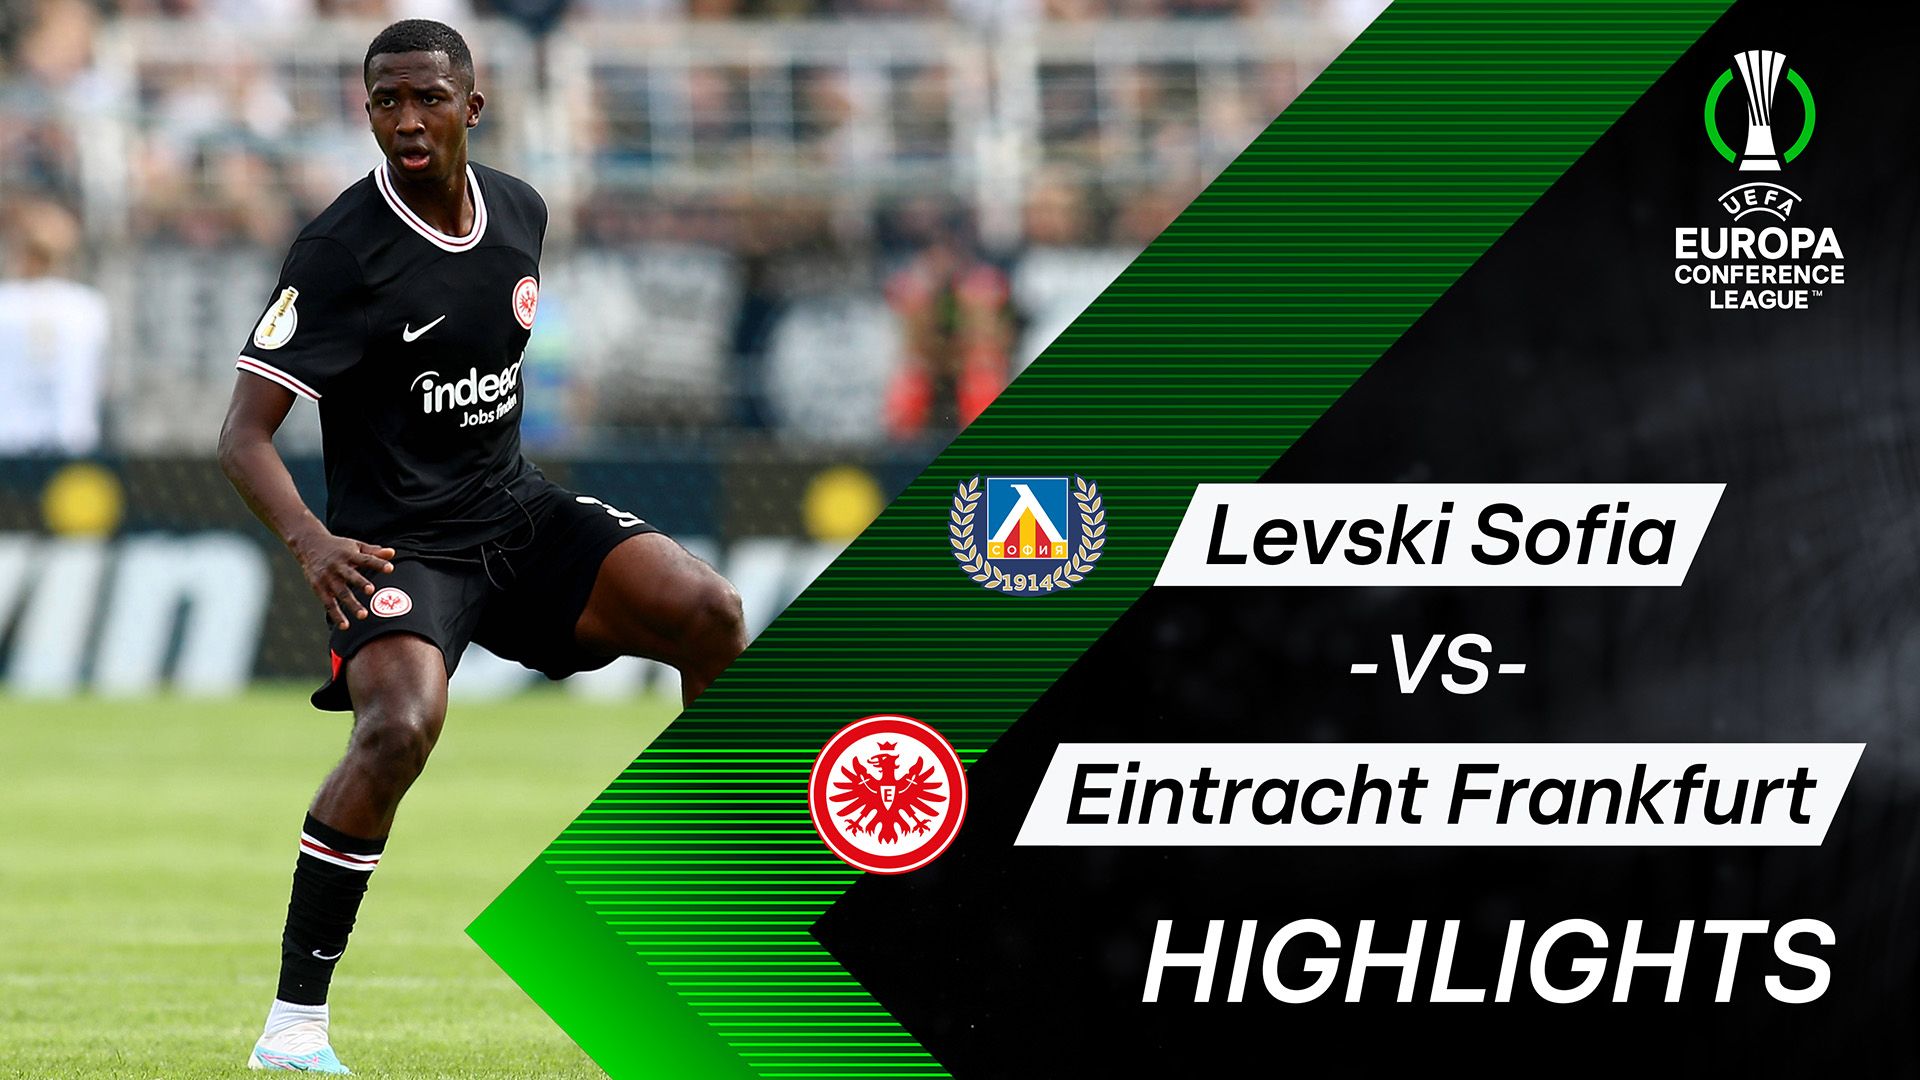 Highlights: Lewski Sofia vs. Eintracht Frankfurt